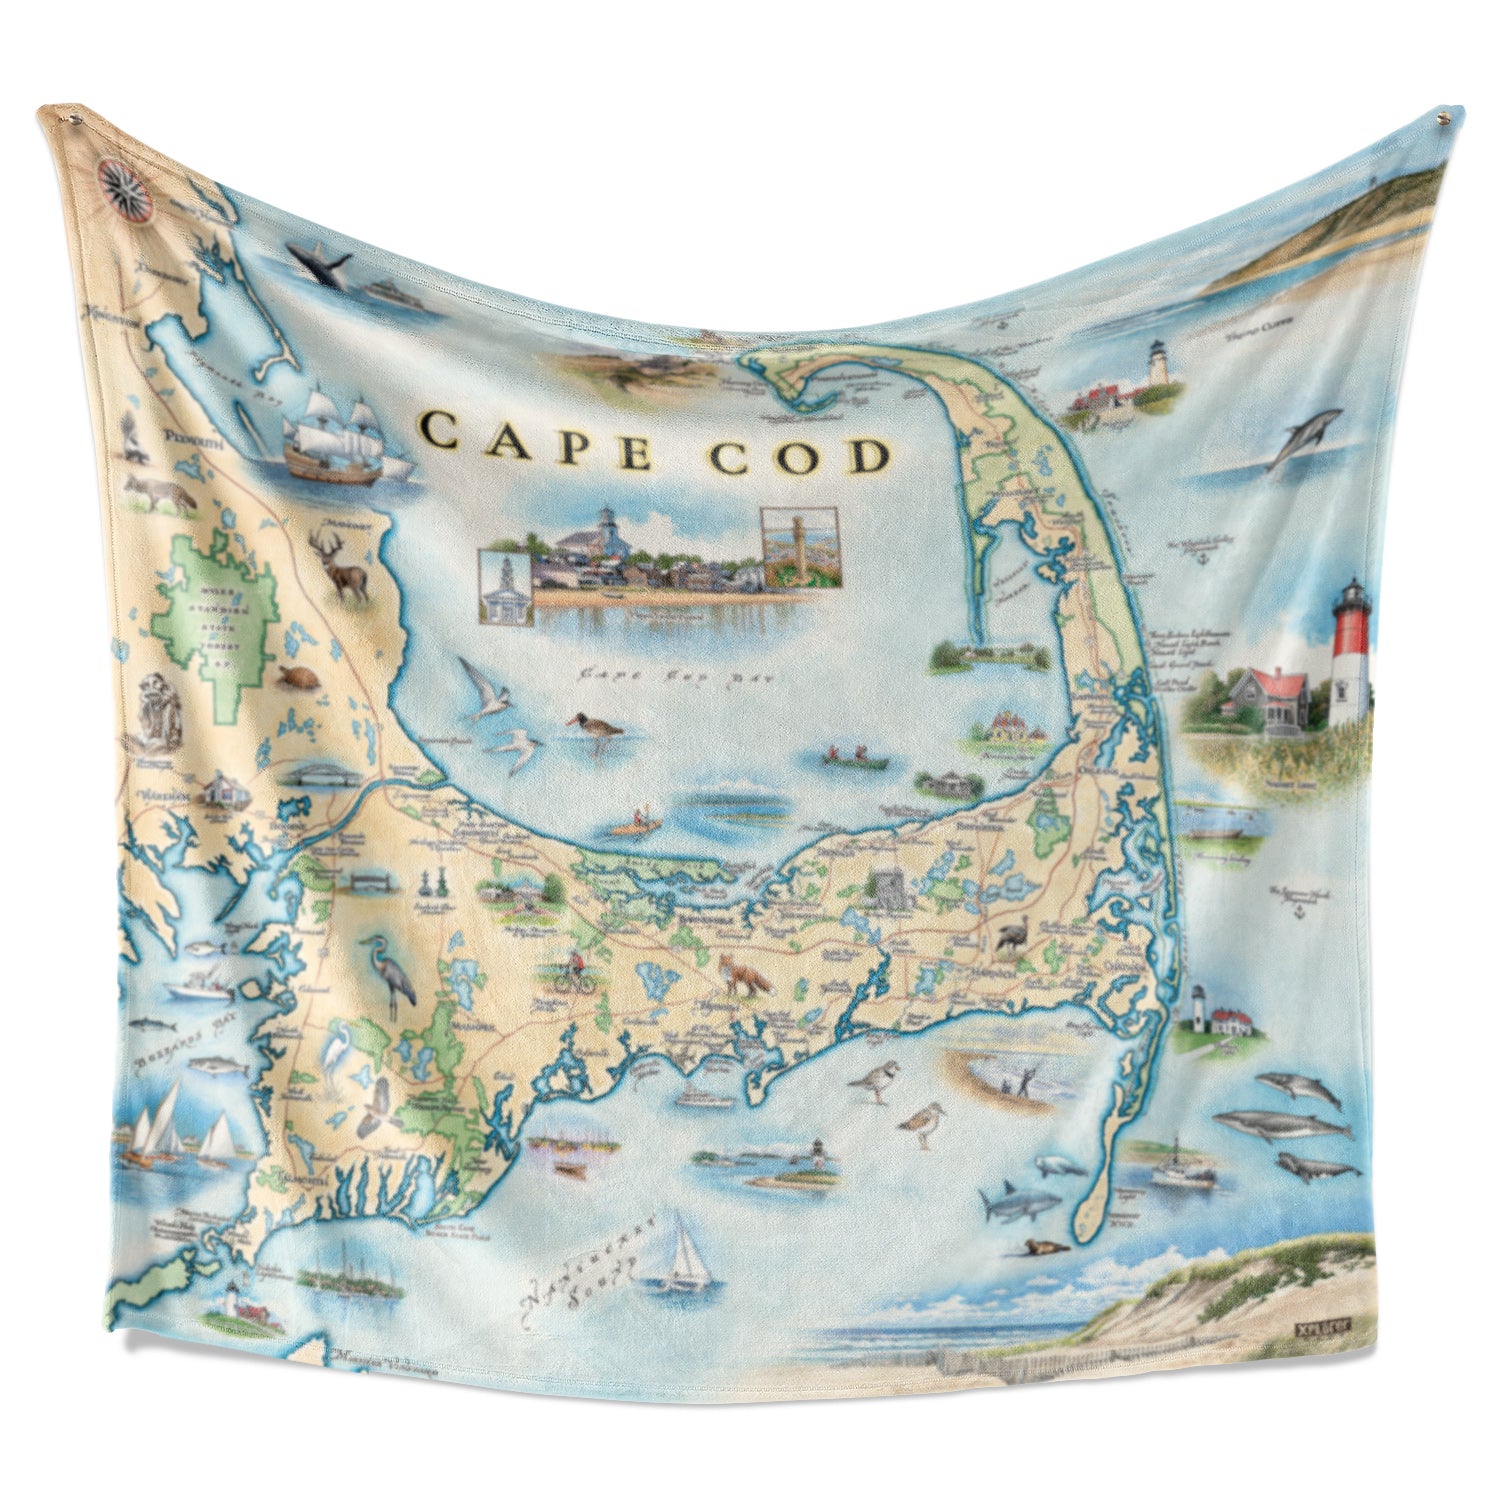 Hanging fleece blanket. A full-color map of Cape Cod on a warm fleece blanket. Measures 50